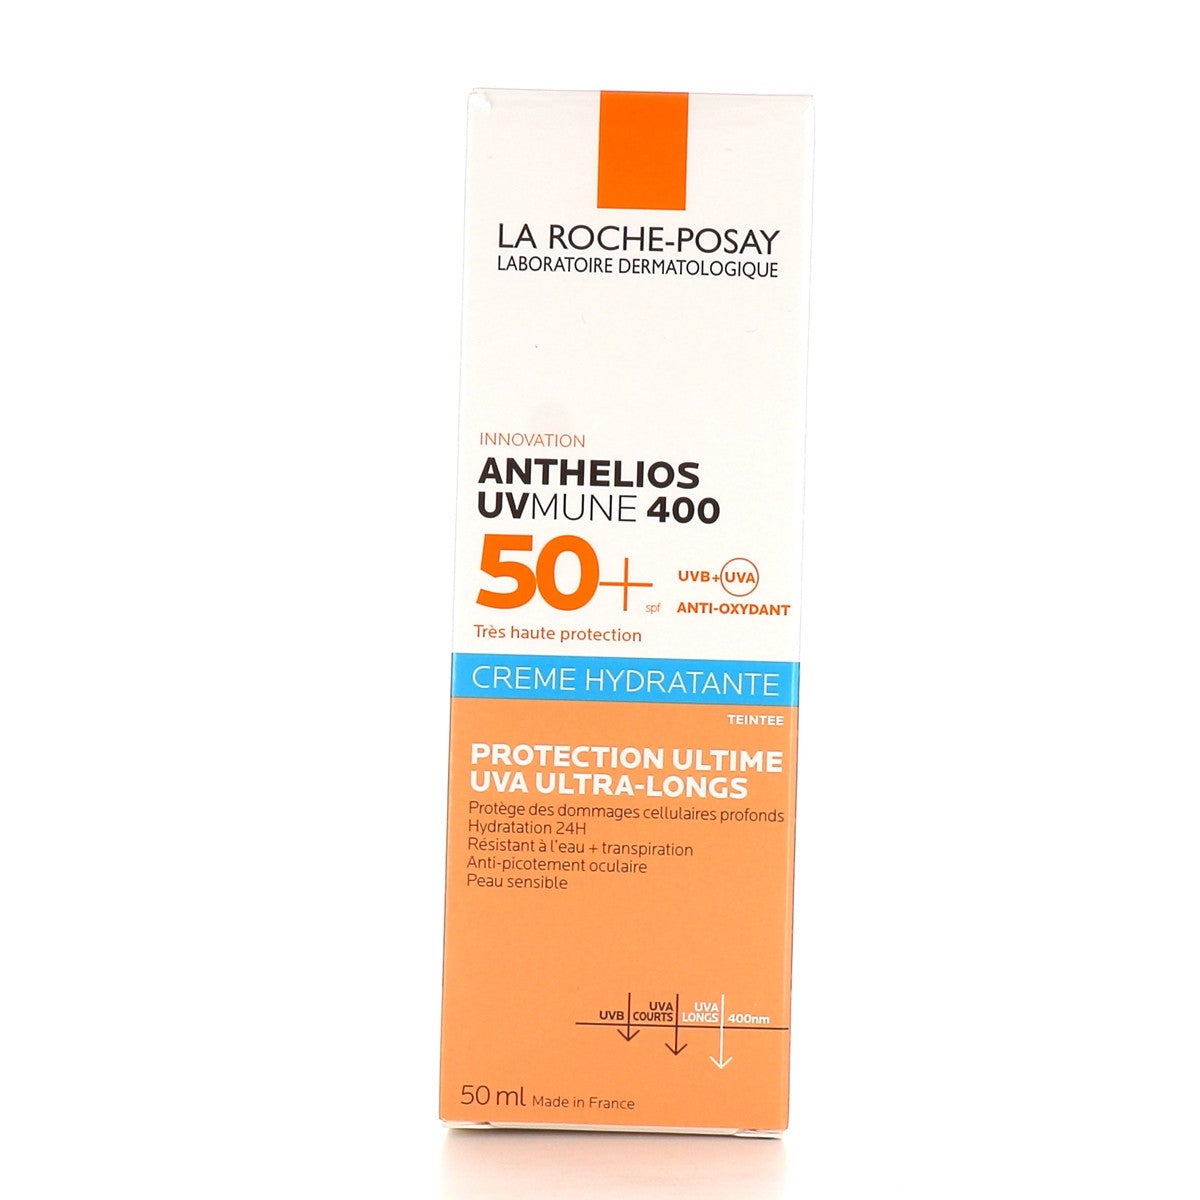 La Roche Posay Anthelios UVMUNE 400 Hydrating Cream Tinted SPF50+ Image